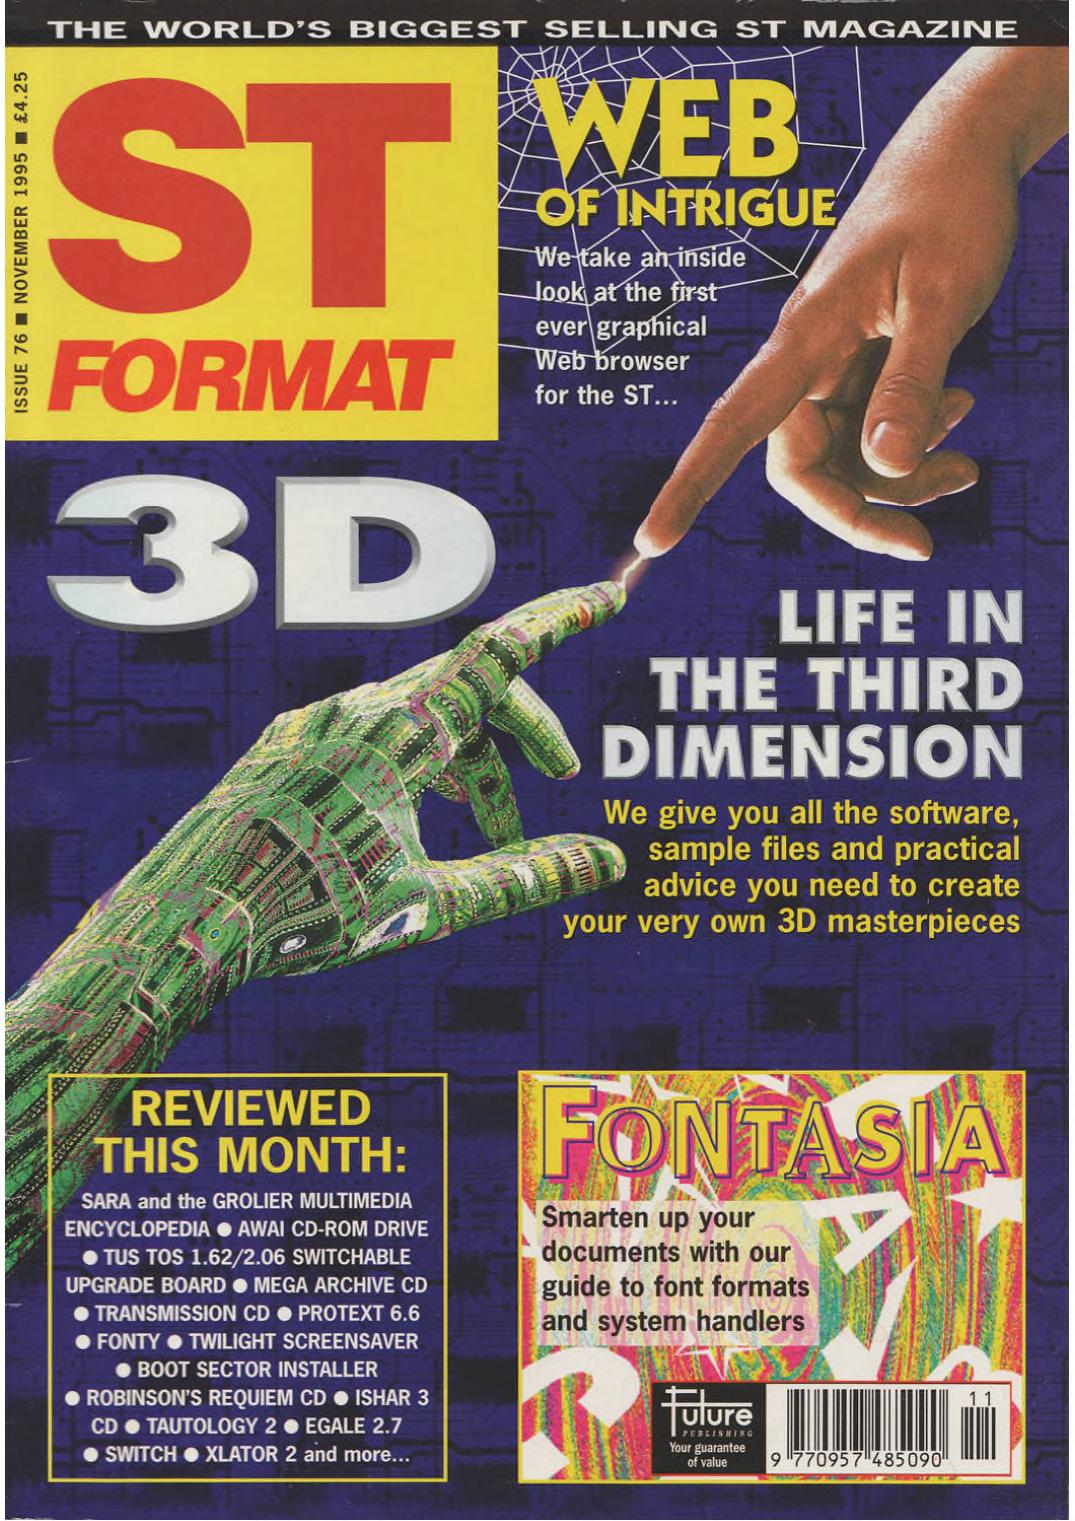 Cover for ST Format 76 (Nov 1995)